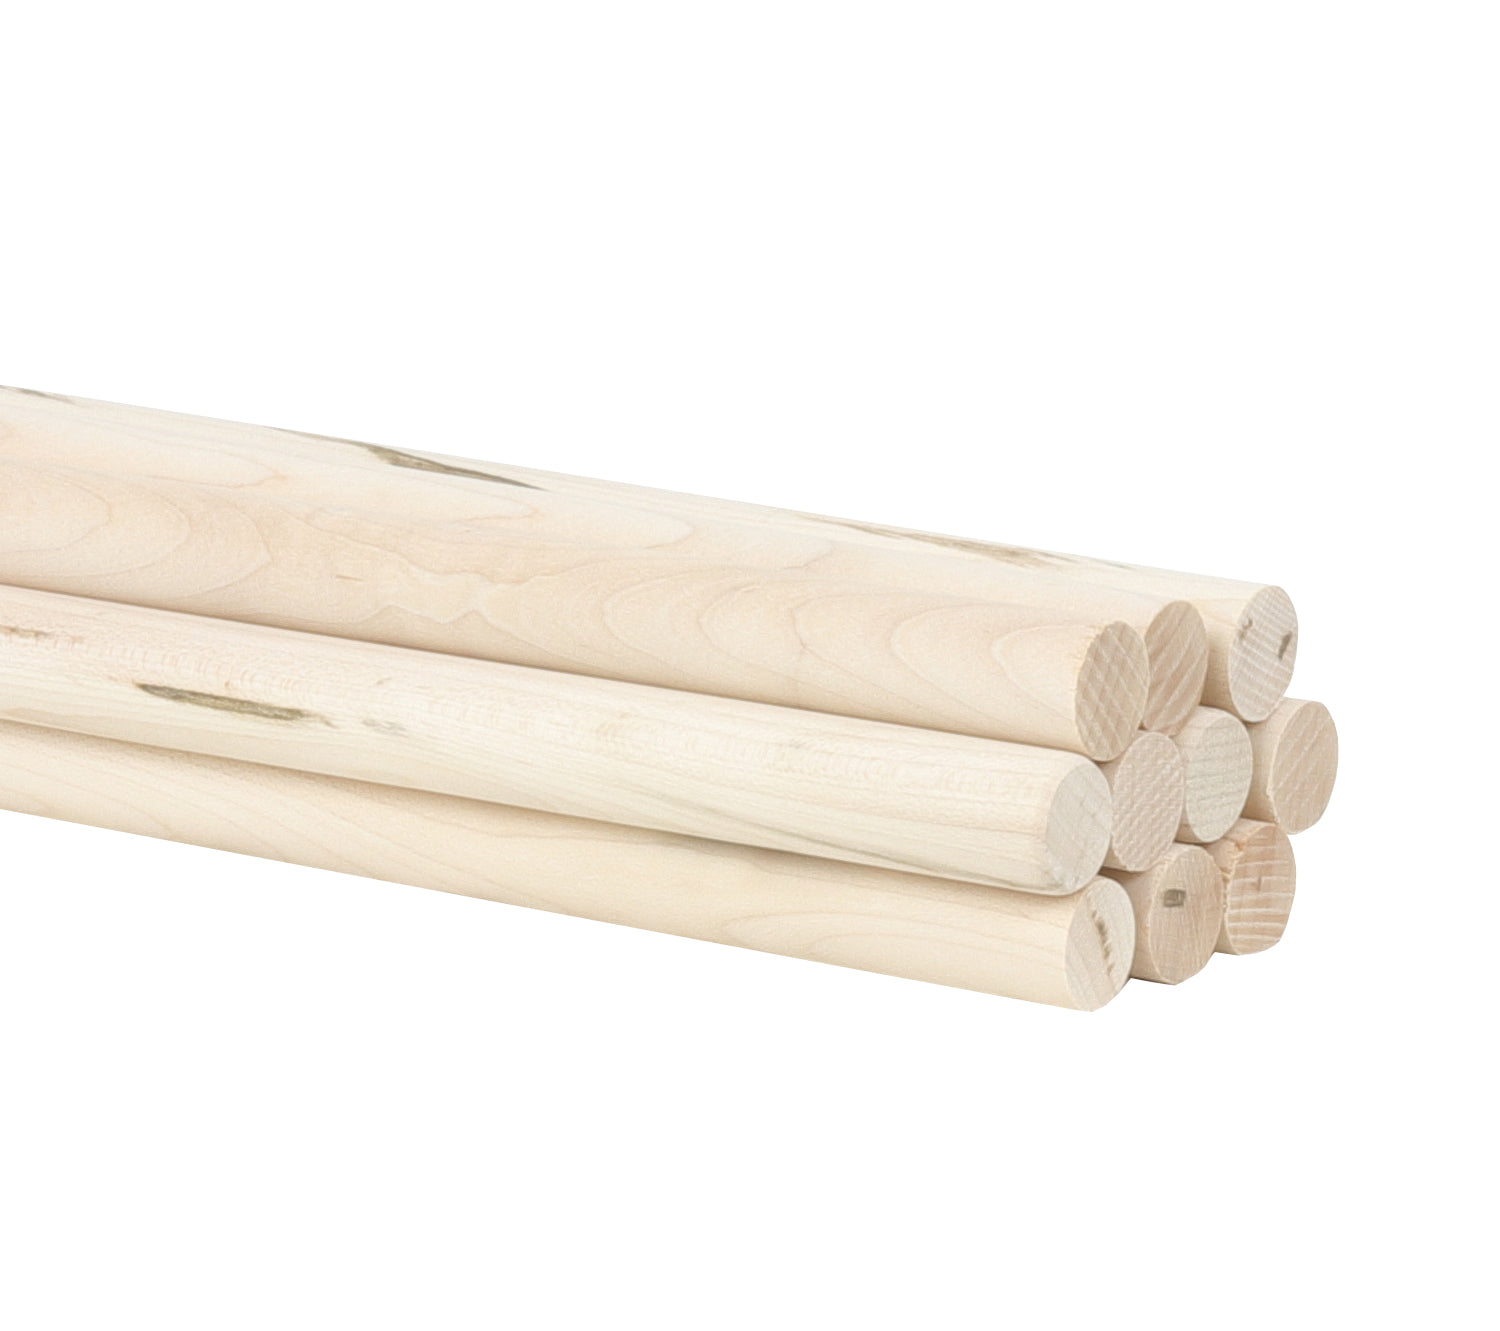 Maple Wooden Dowel Rods, 3/4 Wood Dowels, 10 Pack